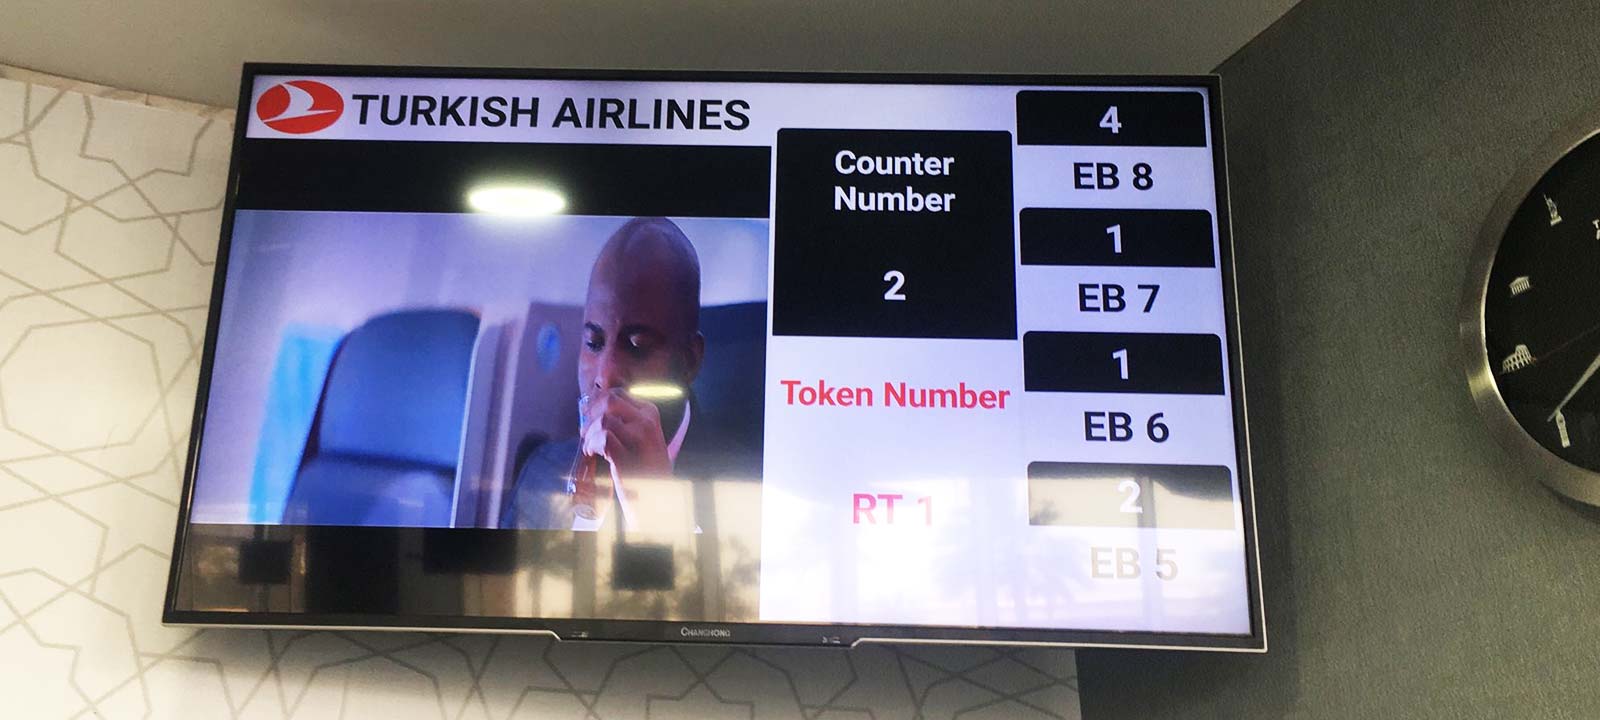 Turkish Airlines, Bahrain